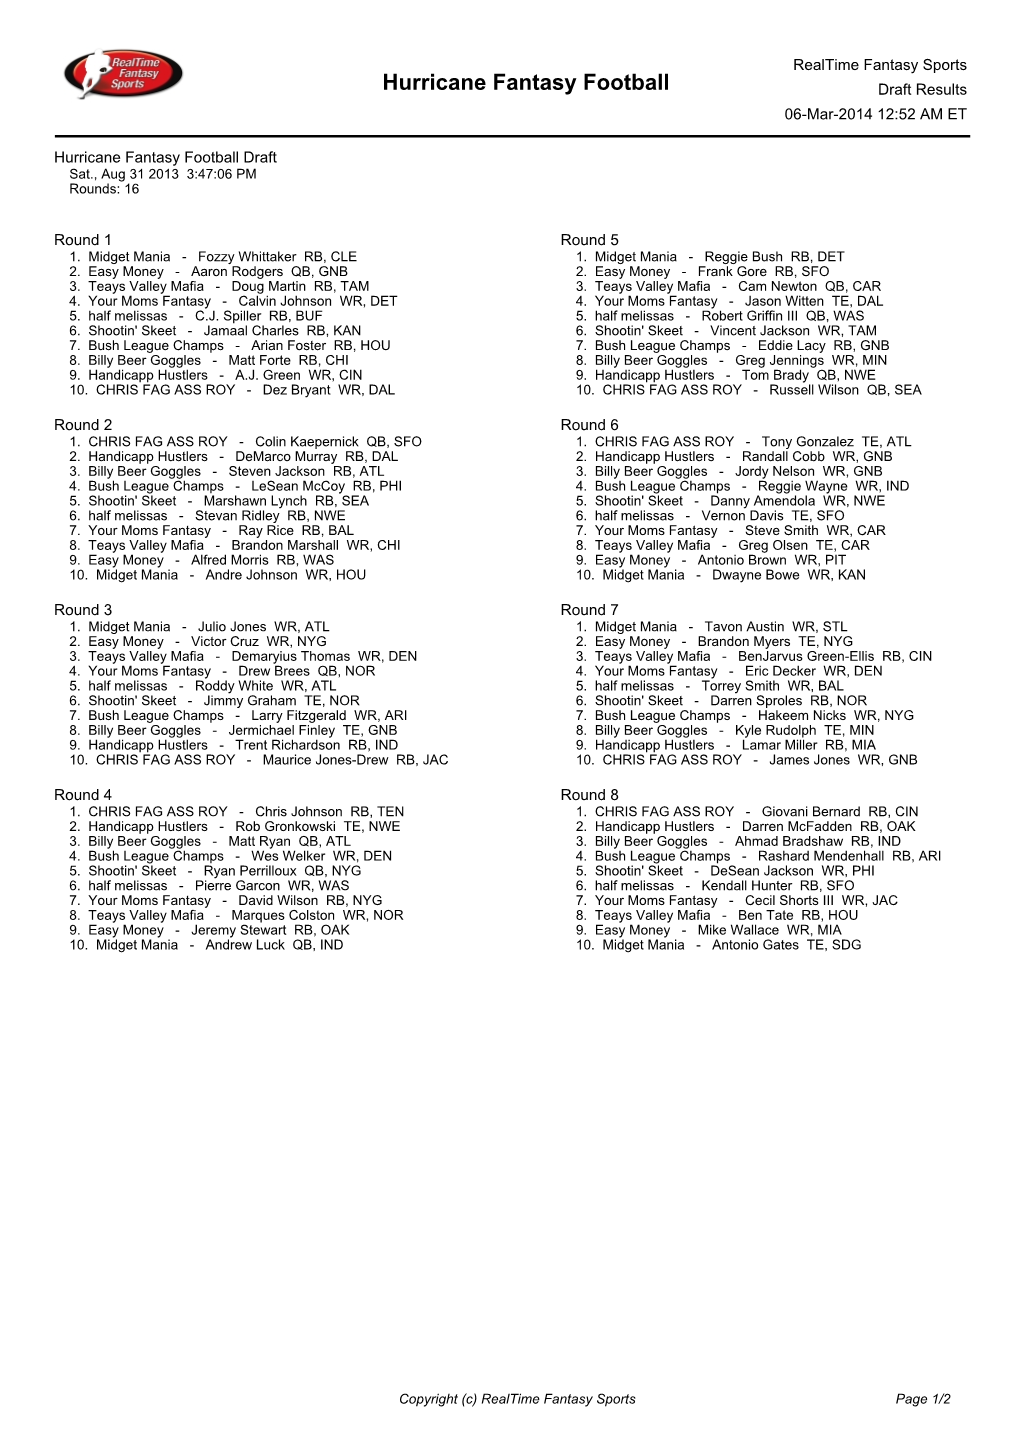 Hurricane Fantasy Football Draft Results 06-Mar-2014 12:52 AM ET